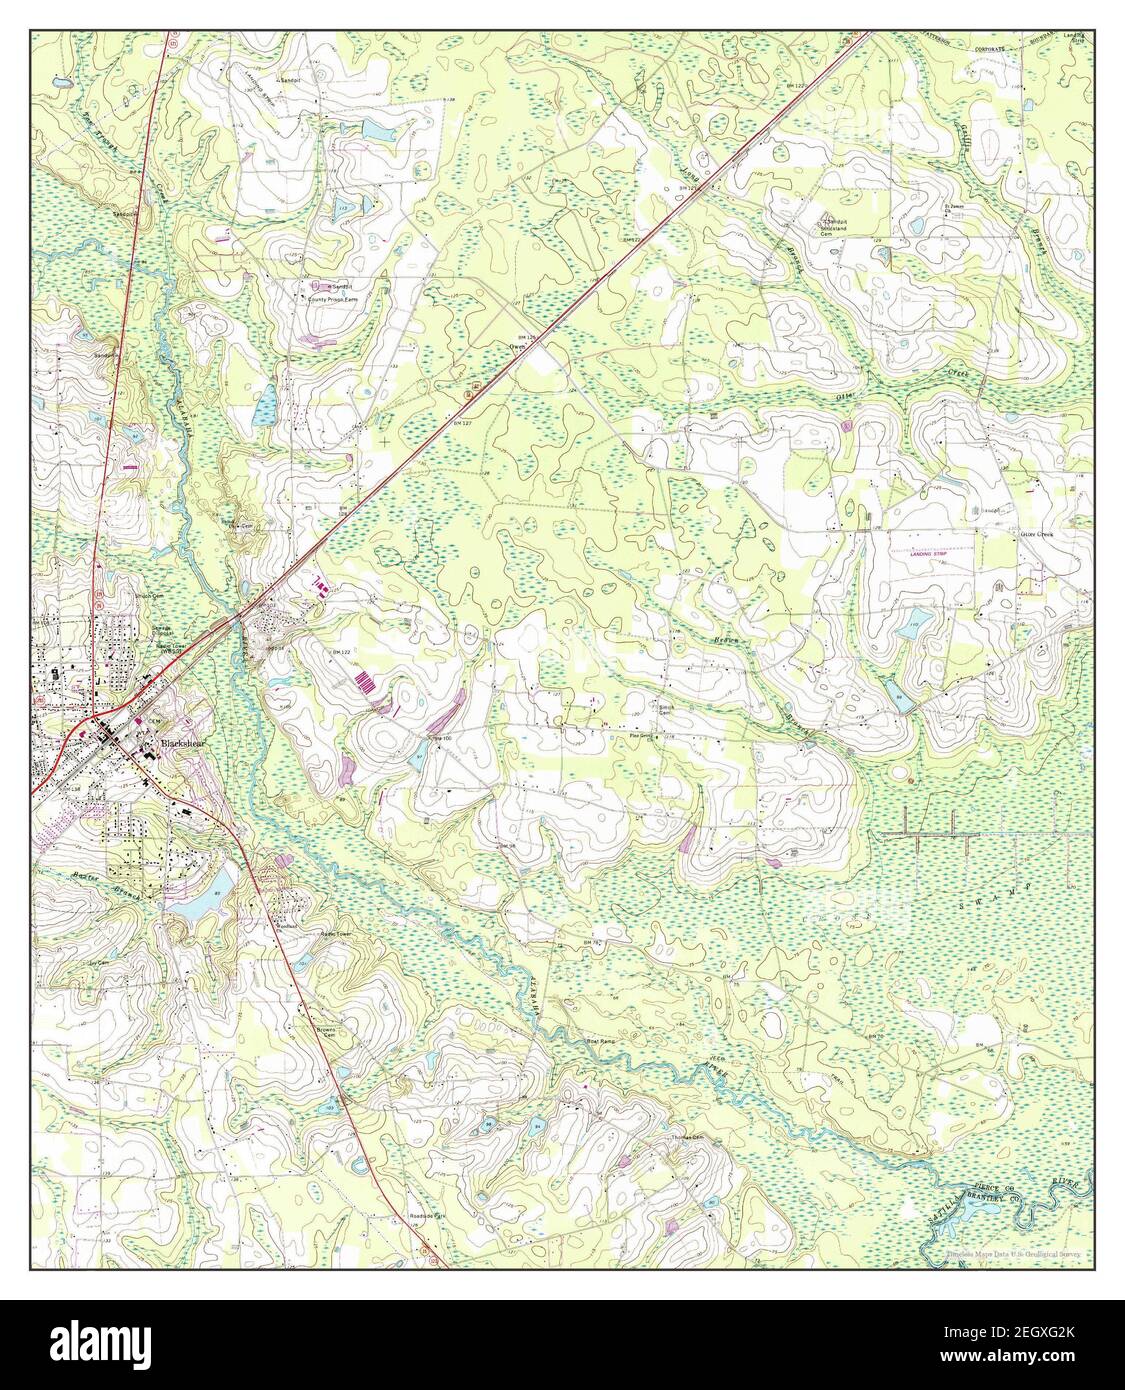 Blackshear East, Georgia, map 1971, 1:24000, United States of America by Timeless Maps, data U.S. Geological Survey Stock Photo